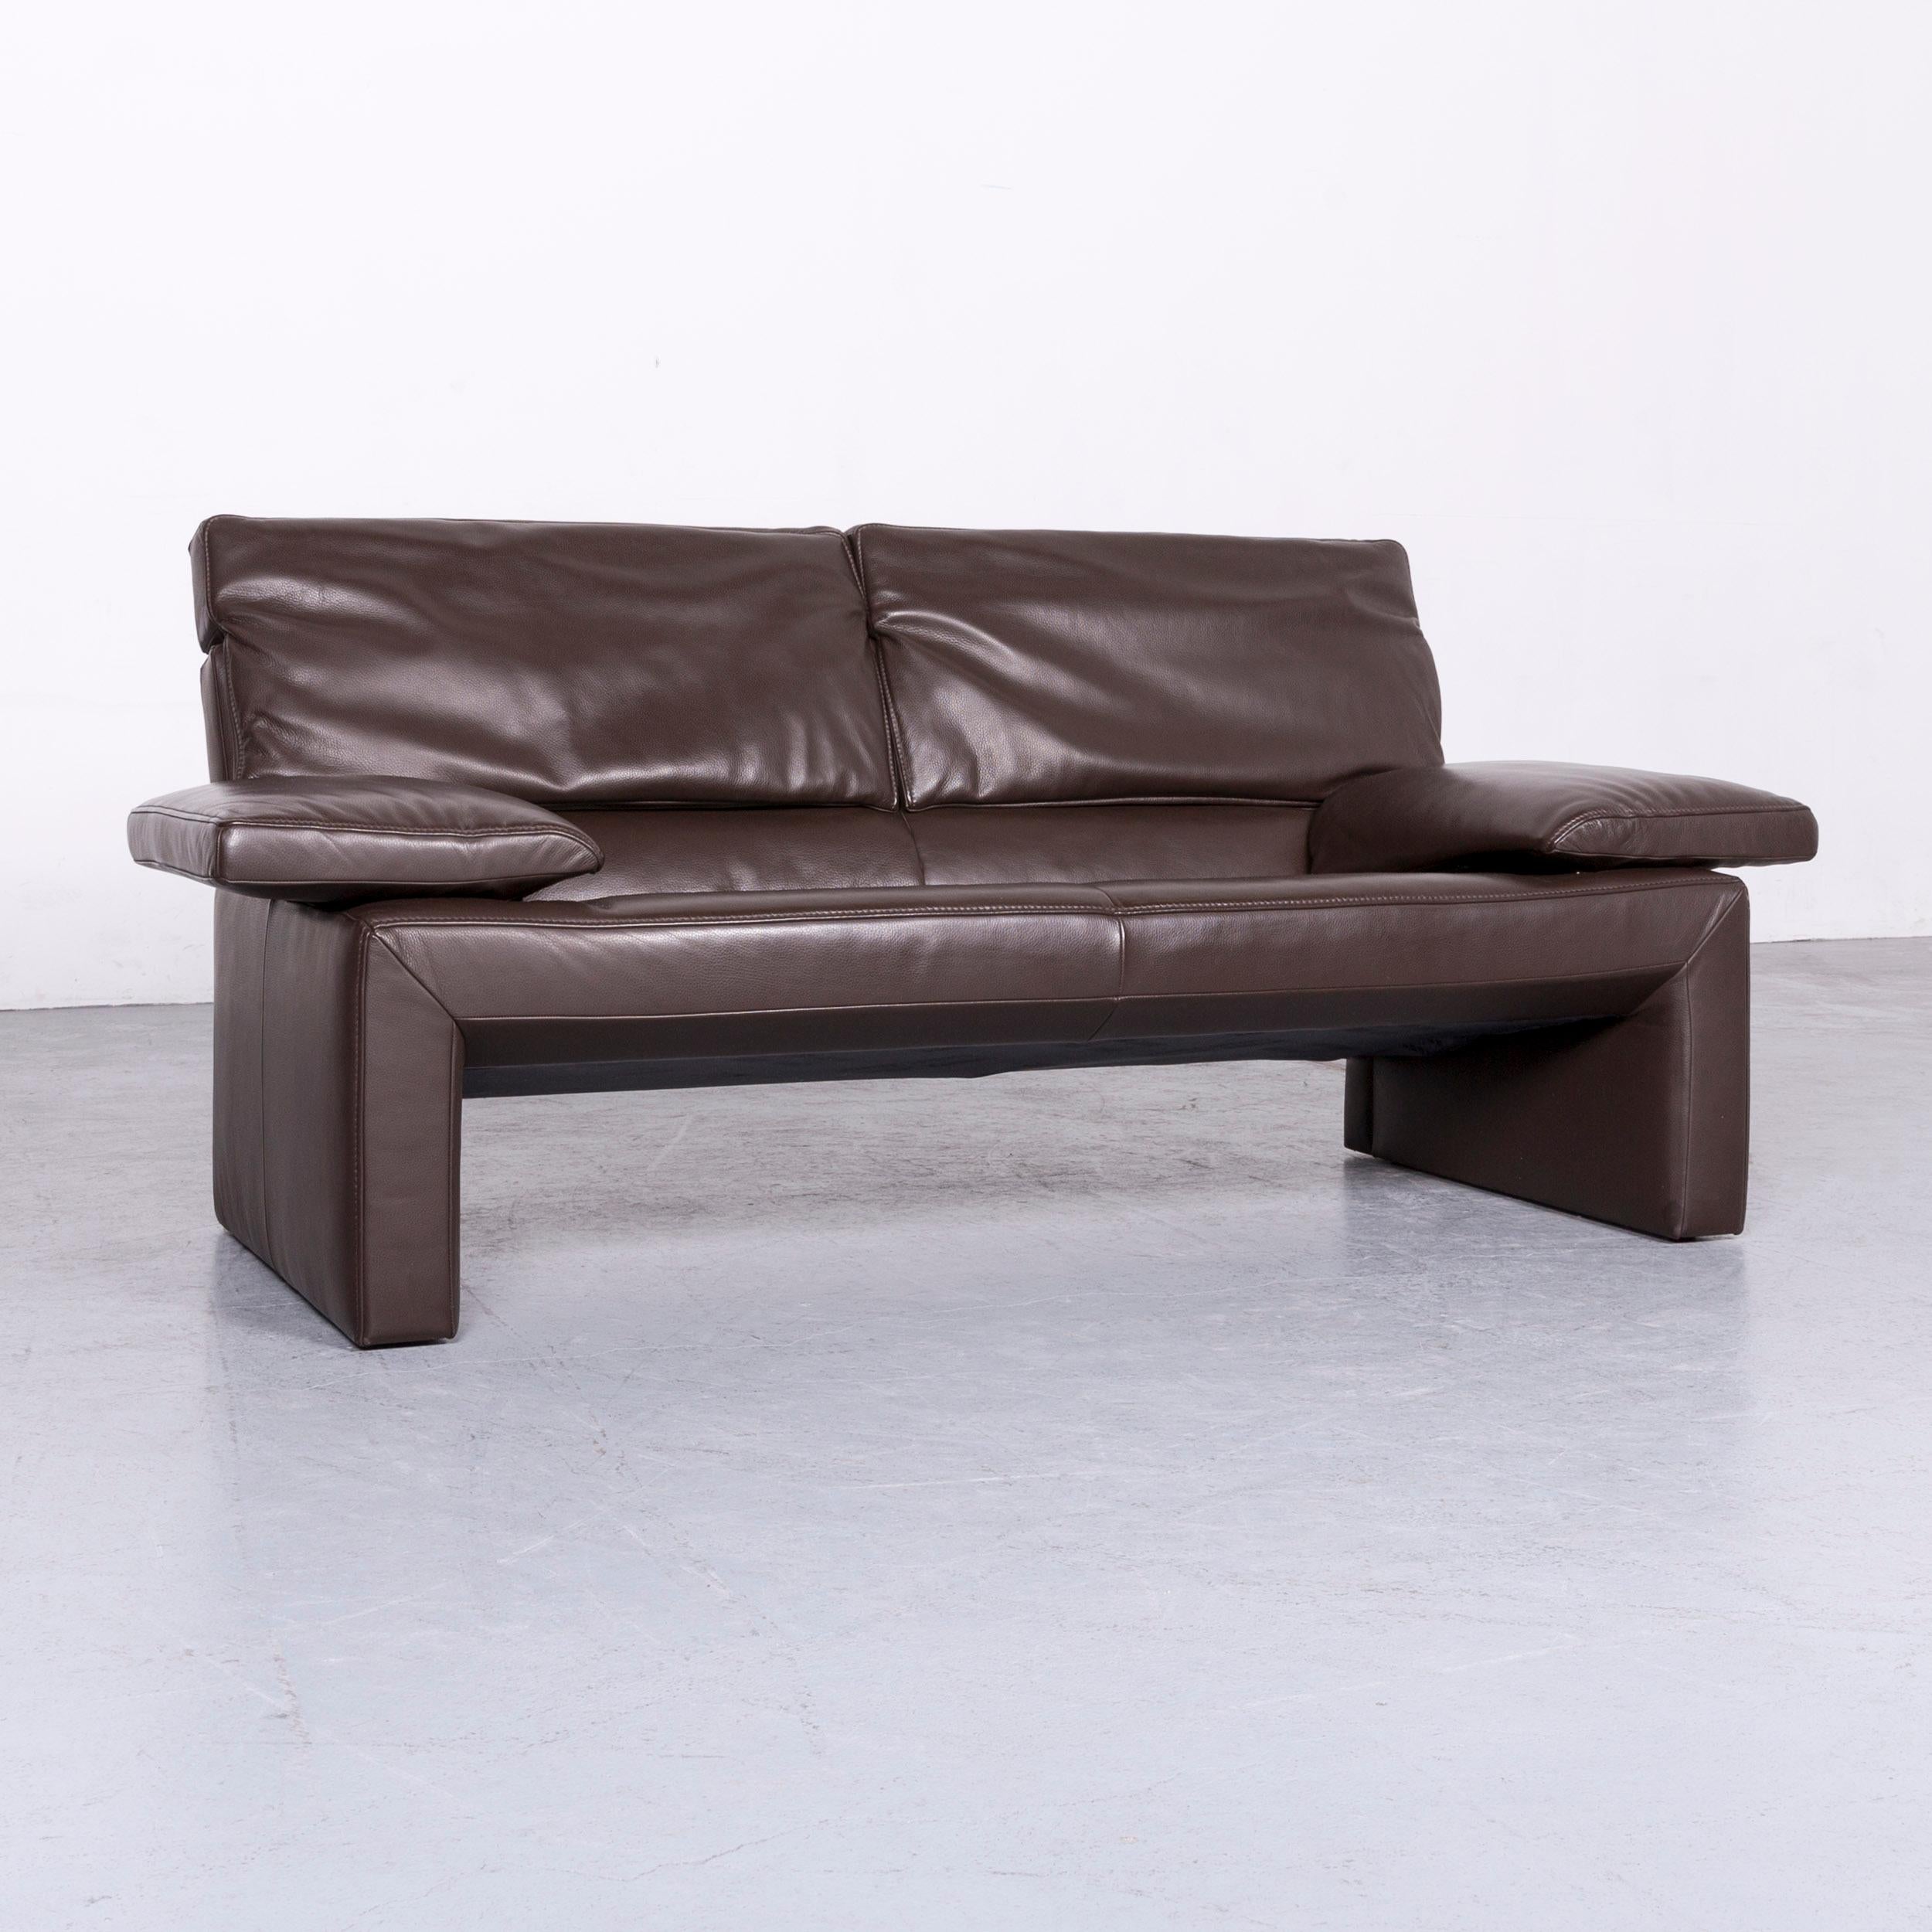 Belgian Jori Espalda Designer Leather Sofa Brown Two-Seat Couch For Sale